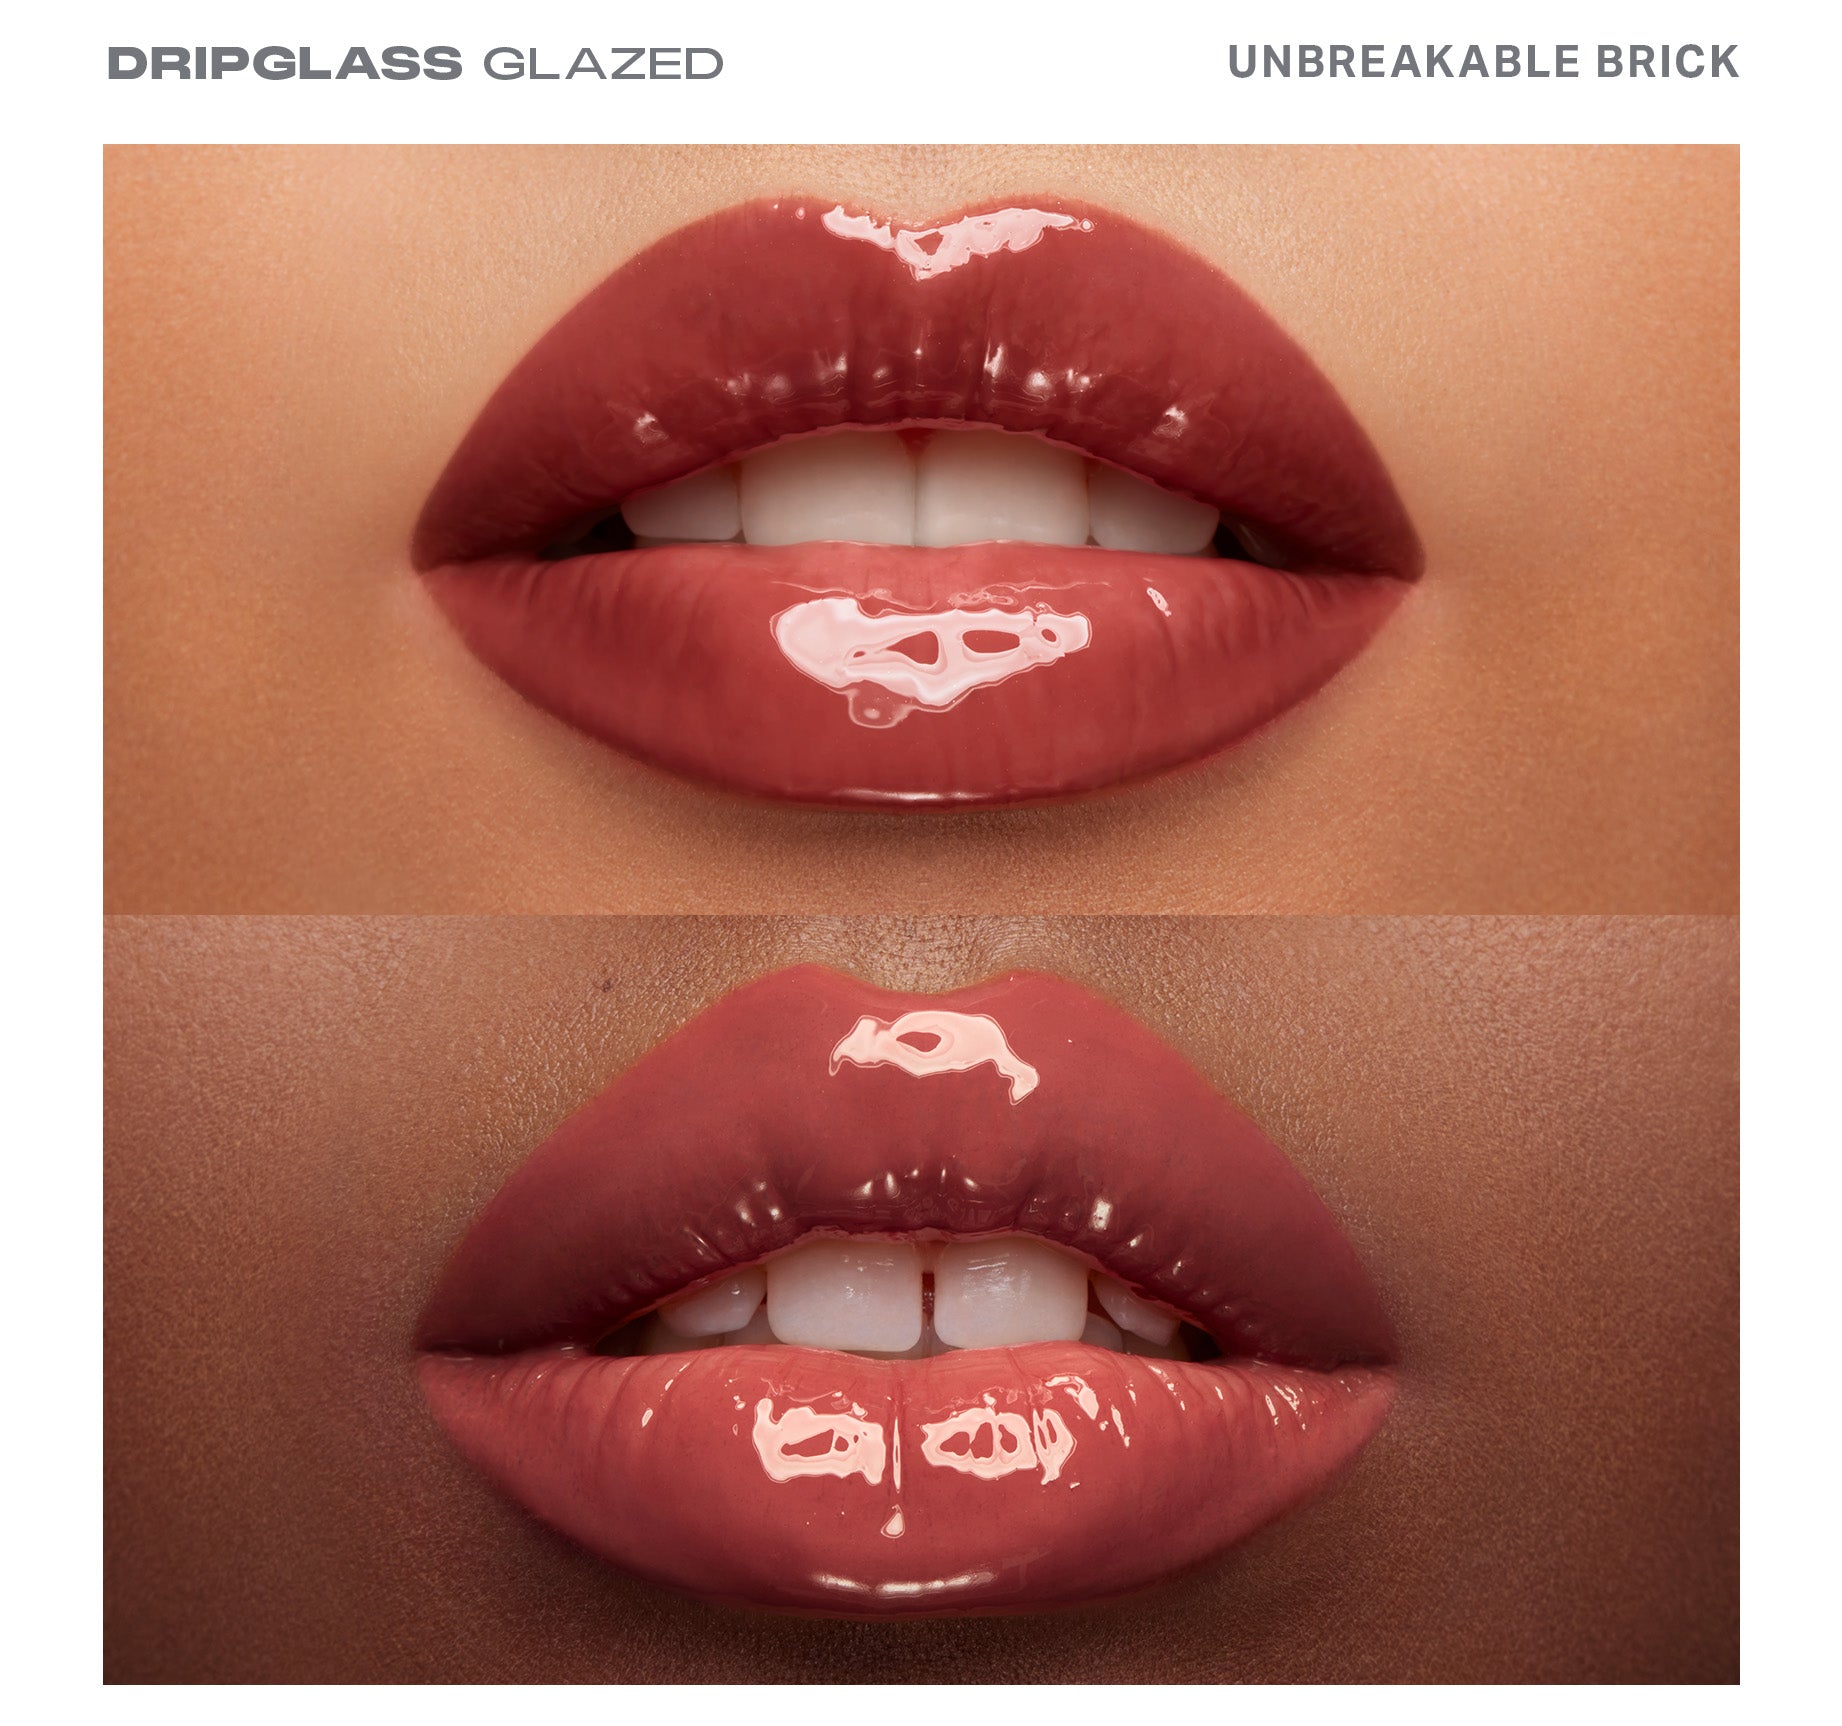 Dripglass Glazed High Shine Lip Gloss - Unbreakable Brick - Image 3